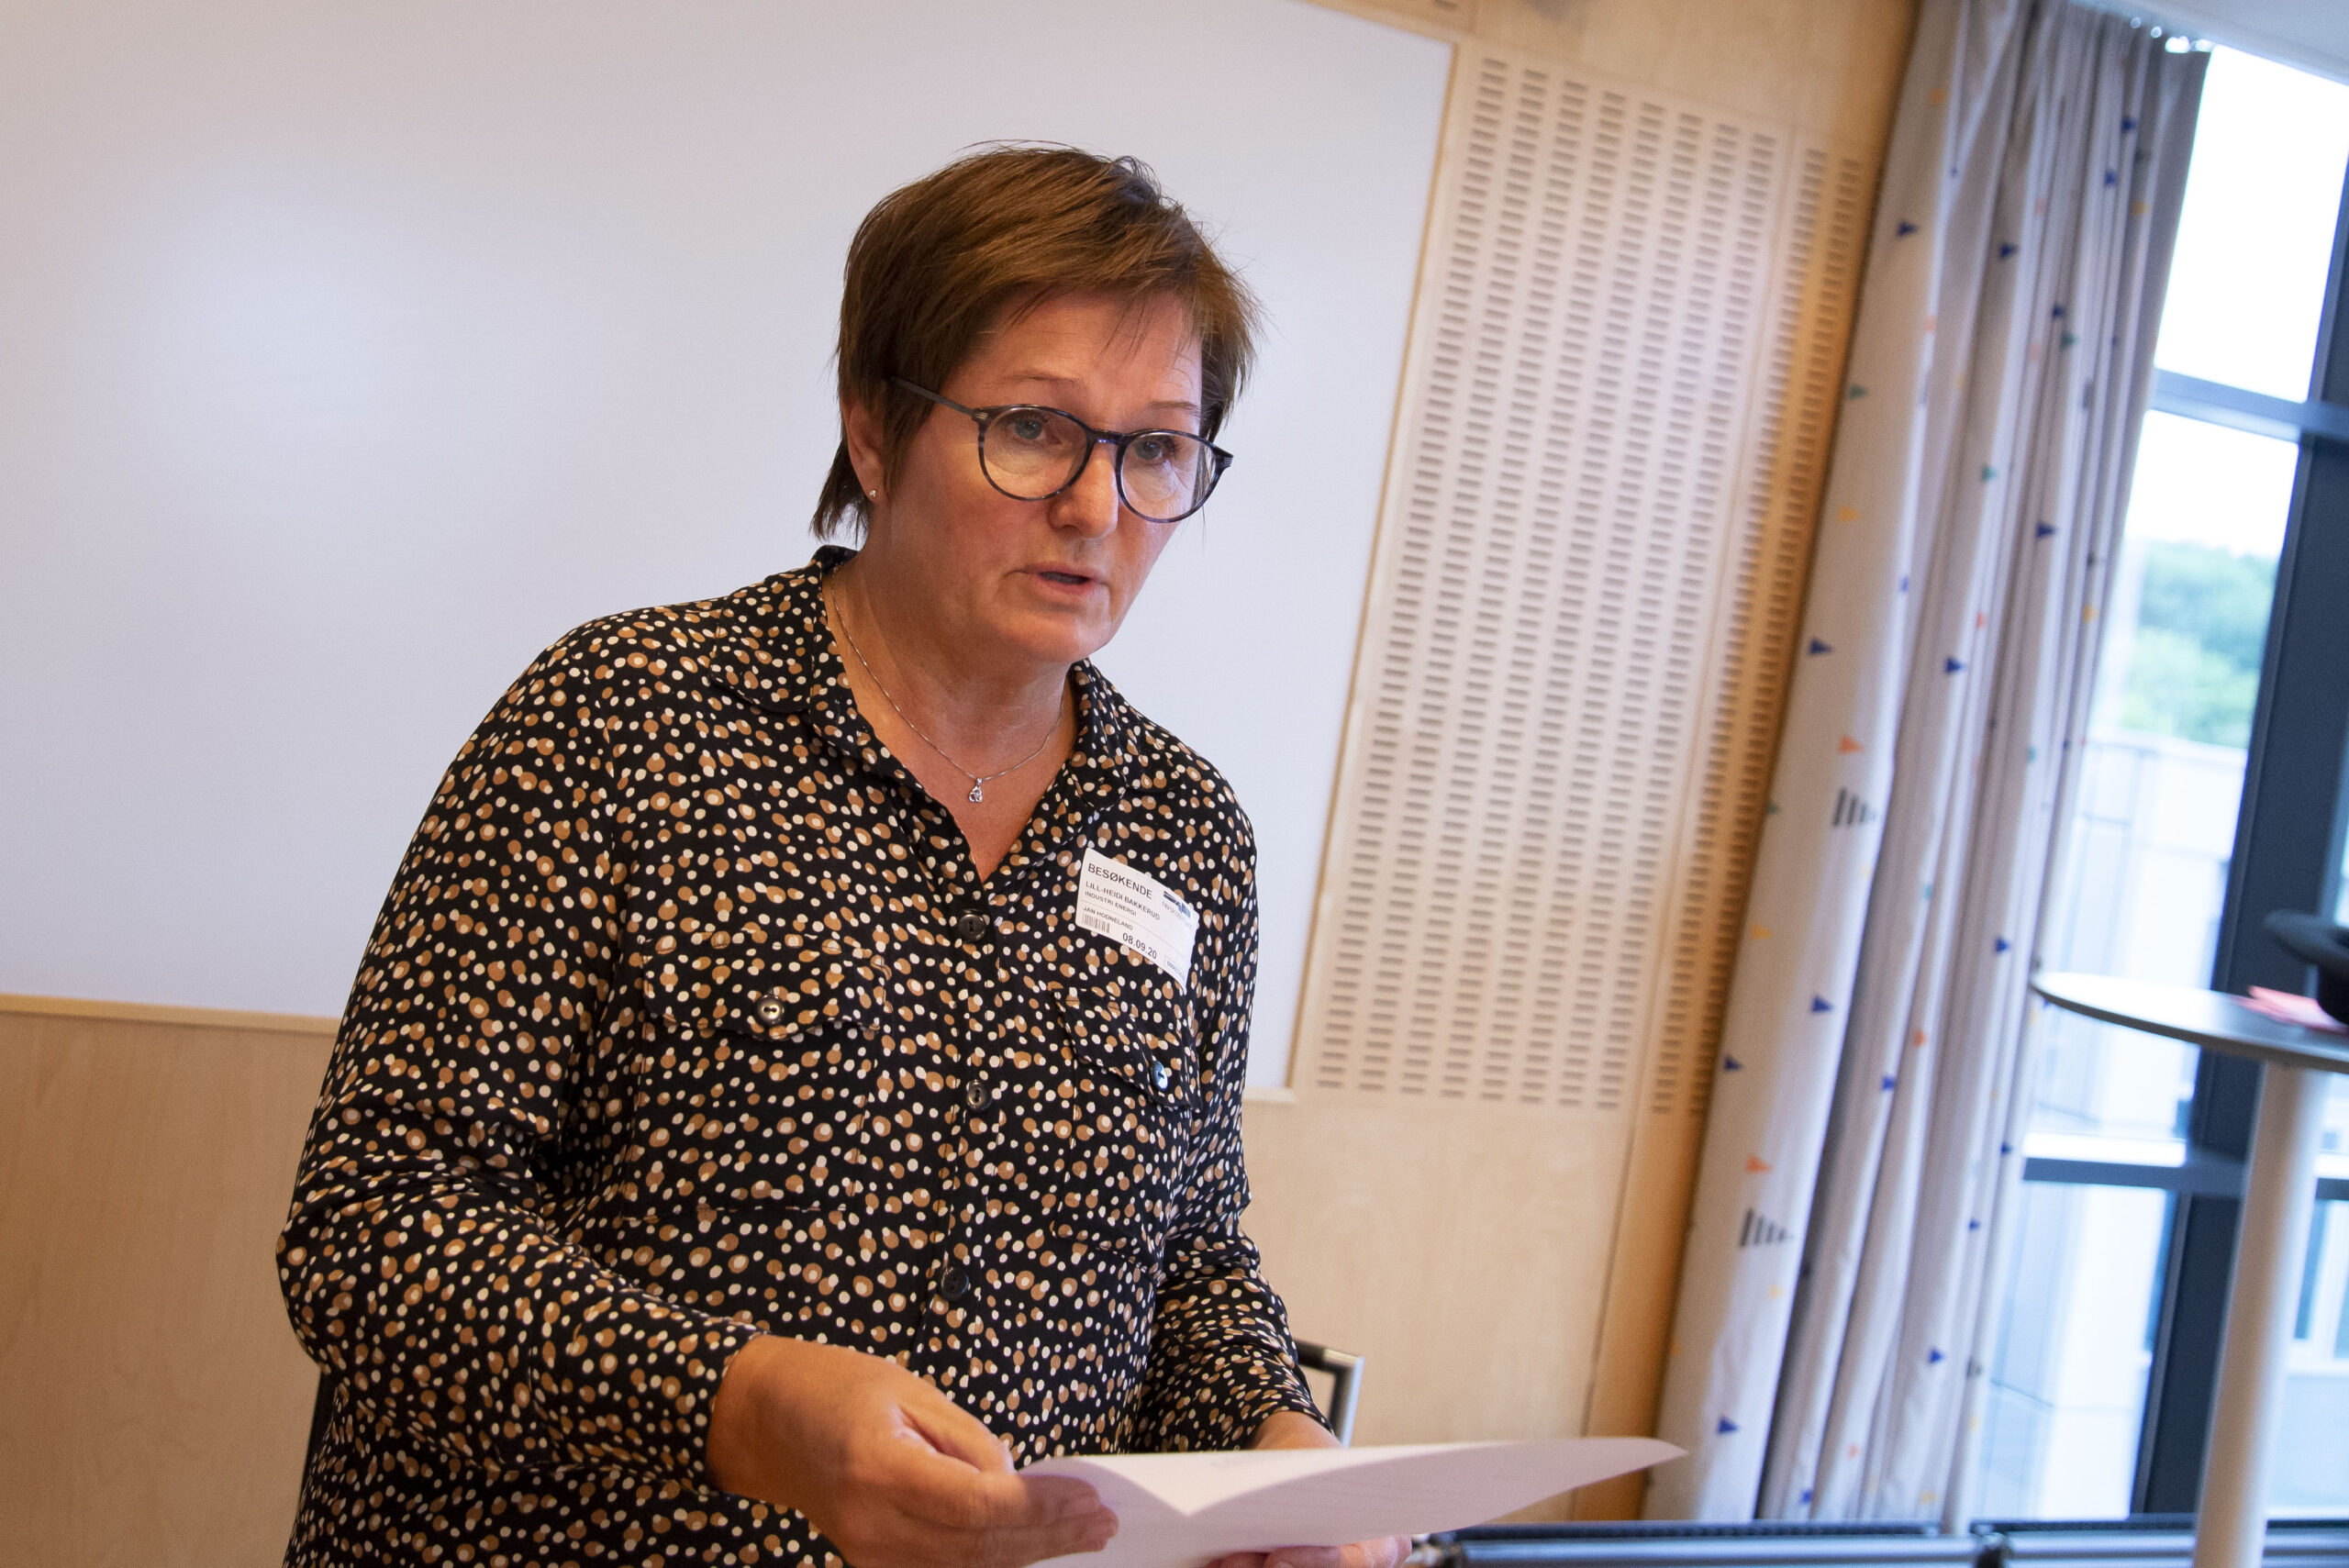 Lill-Heidi Bakkerud, deputy leader in Industri Energi. Photo: Atle Espen Helgesen